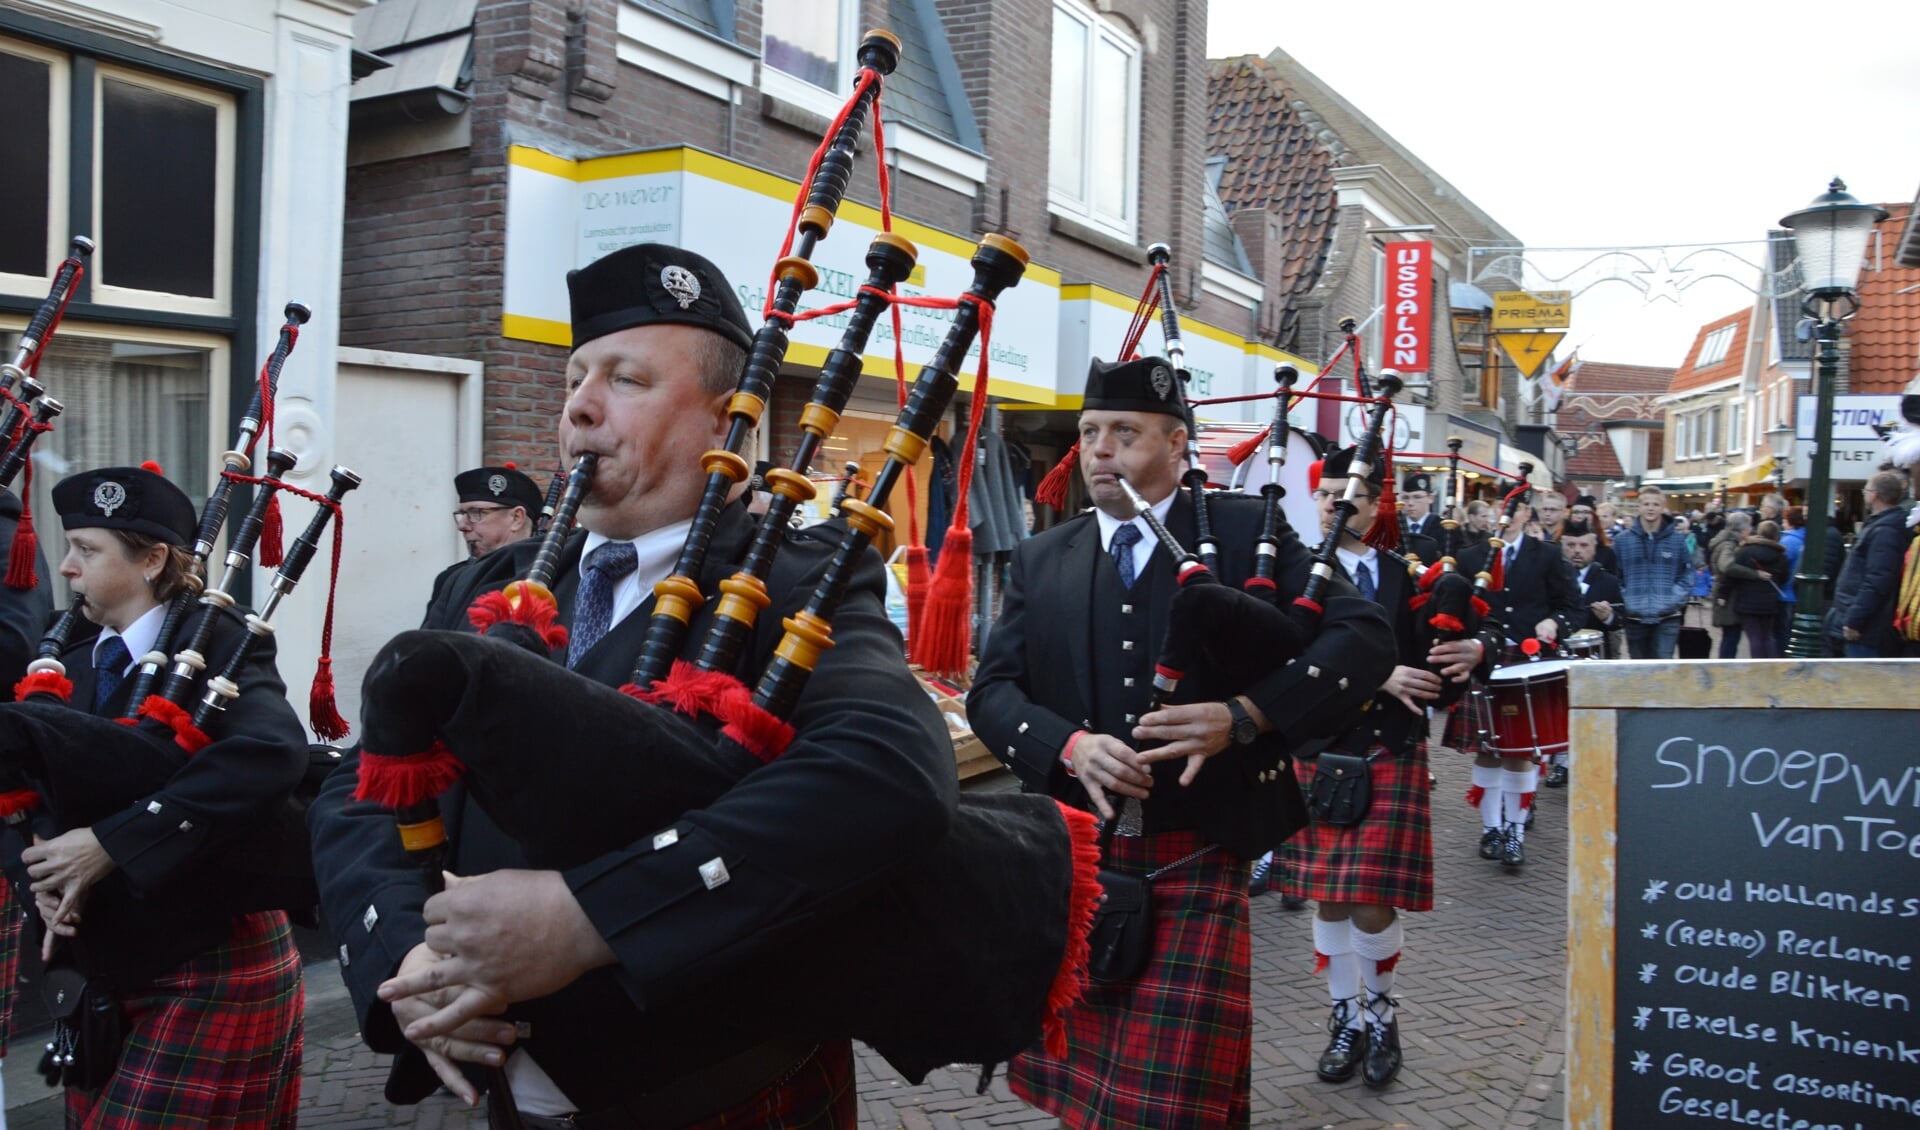 Doedelzakspelers van Saendistrict Pipes and Drums in de Weverstraat. 